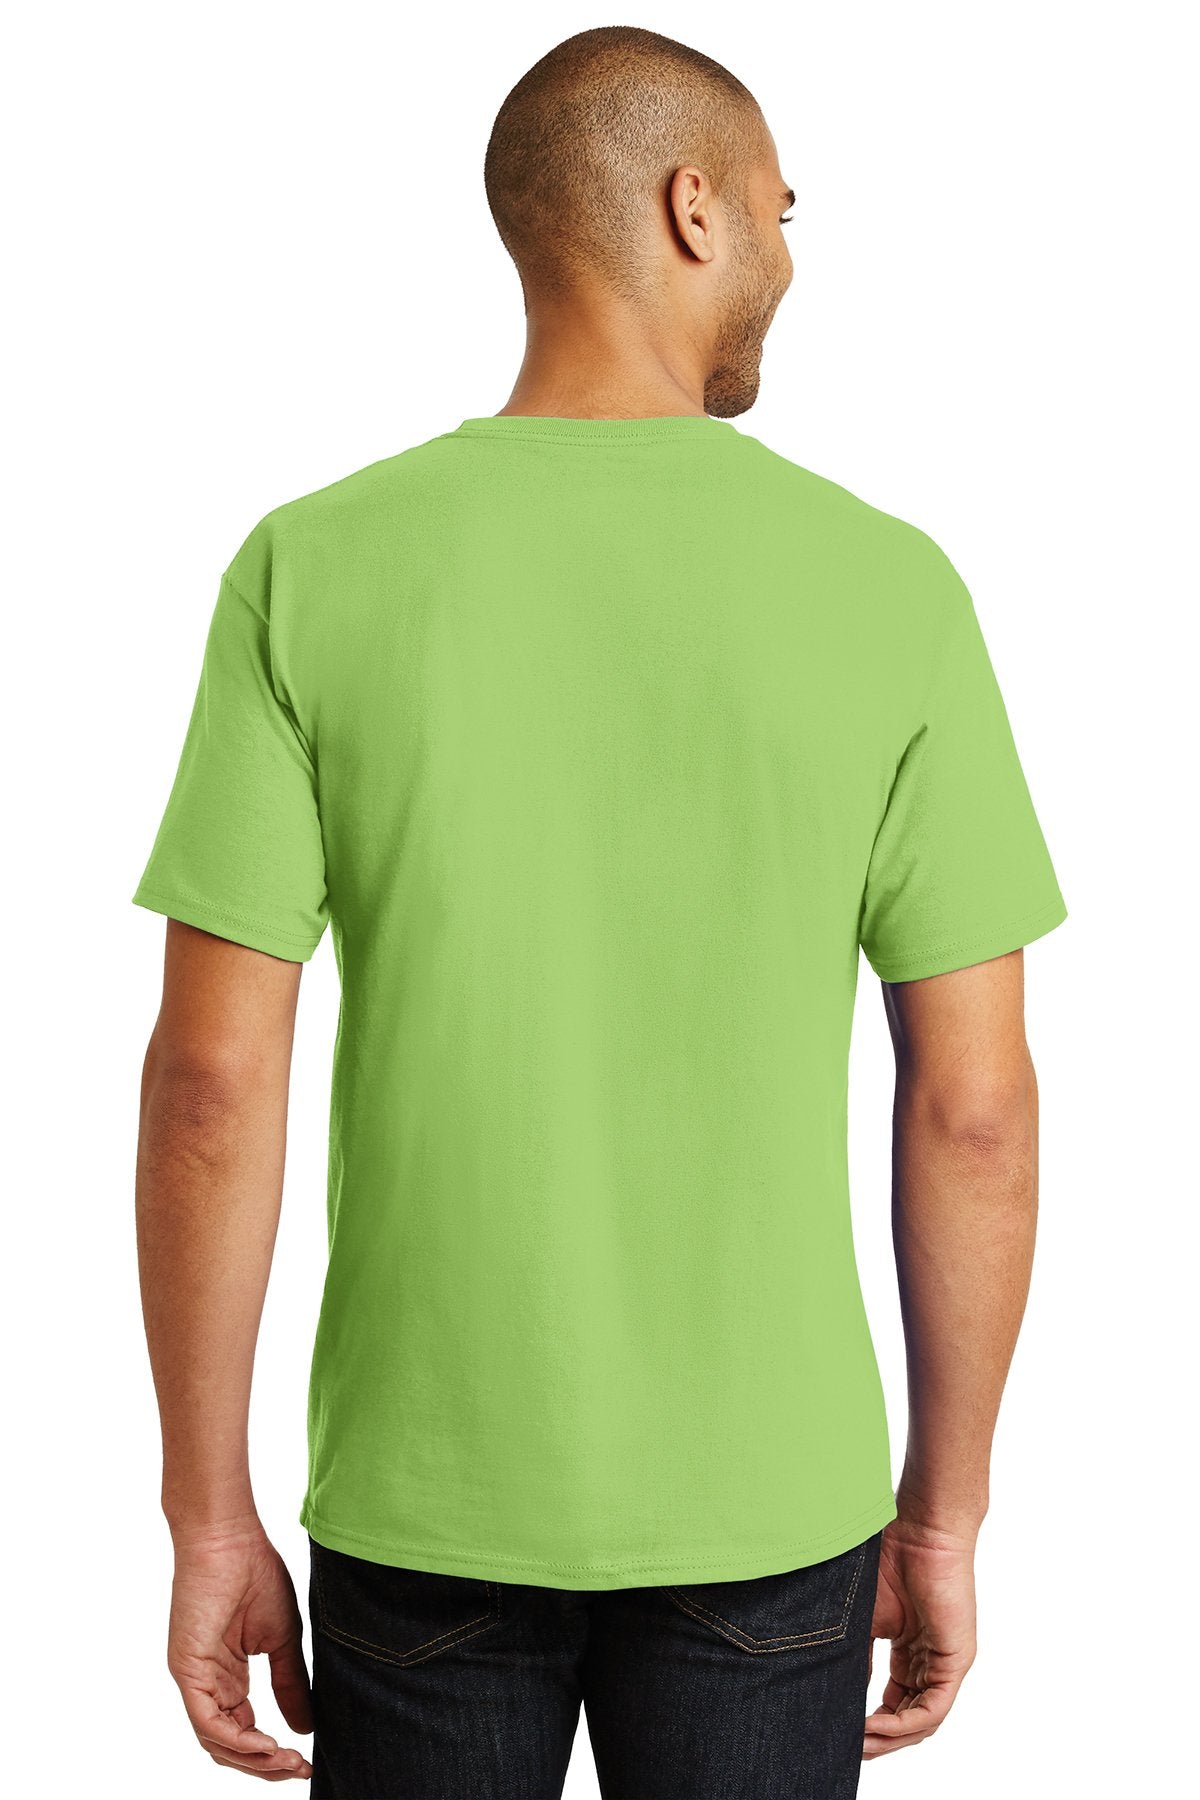 hanes tagless cotton t shirt 5250 lime